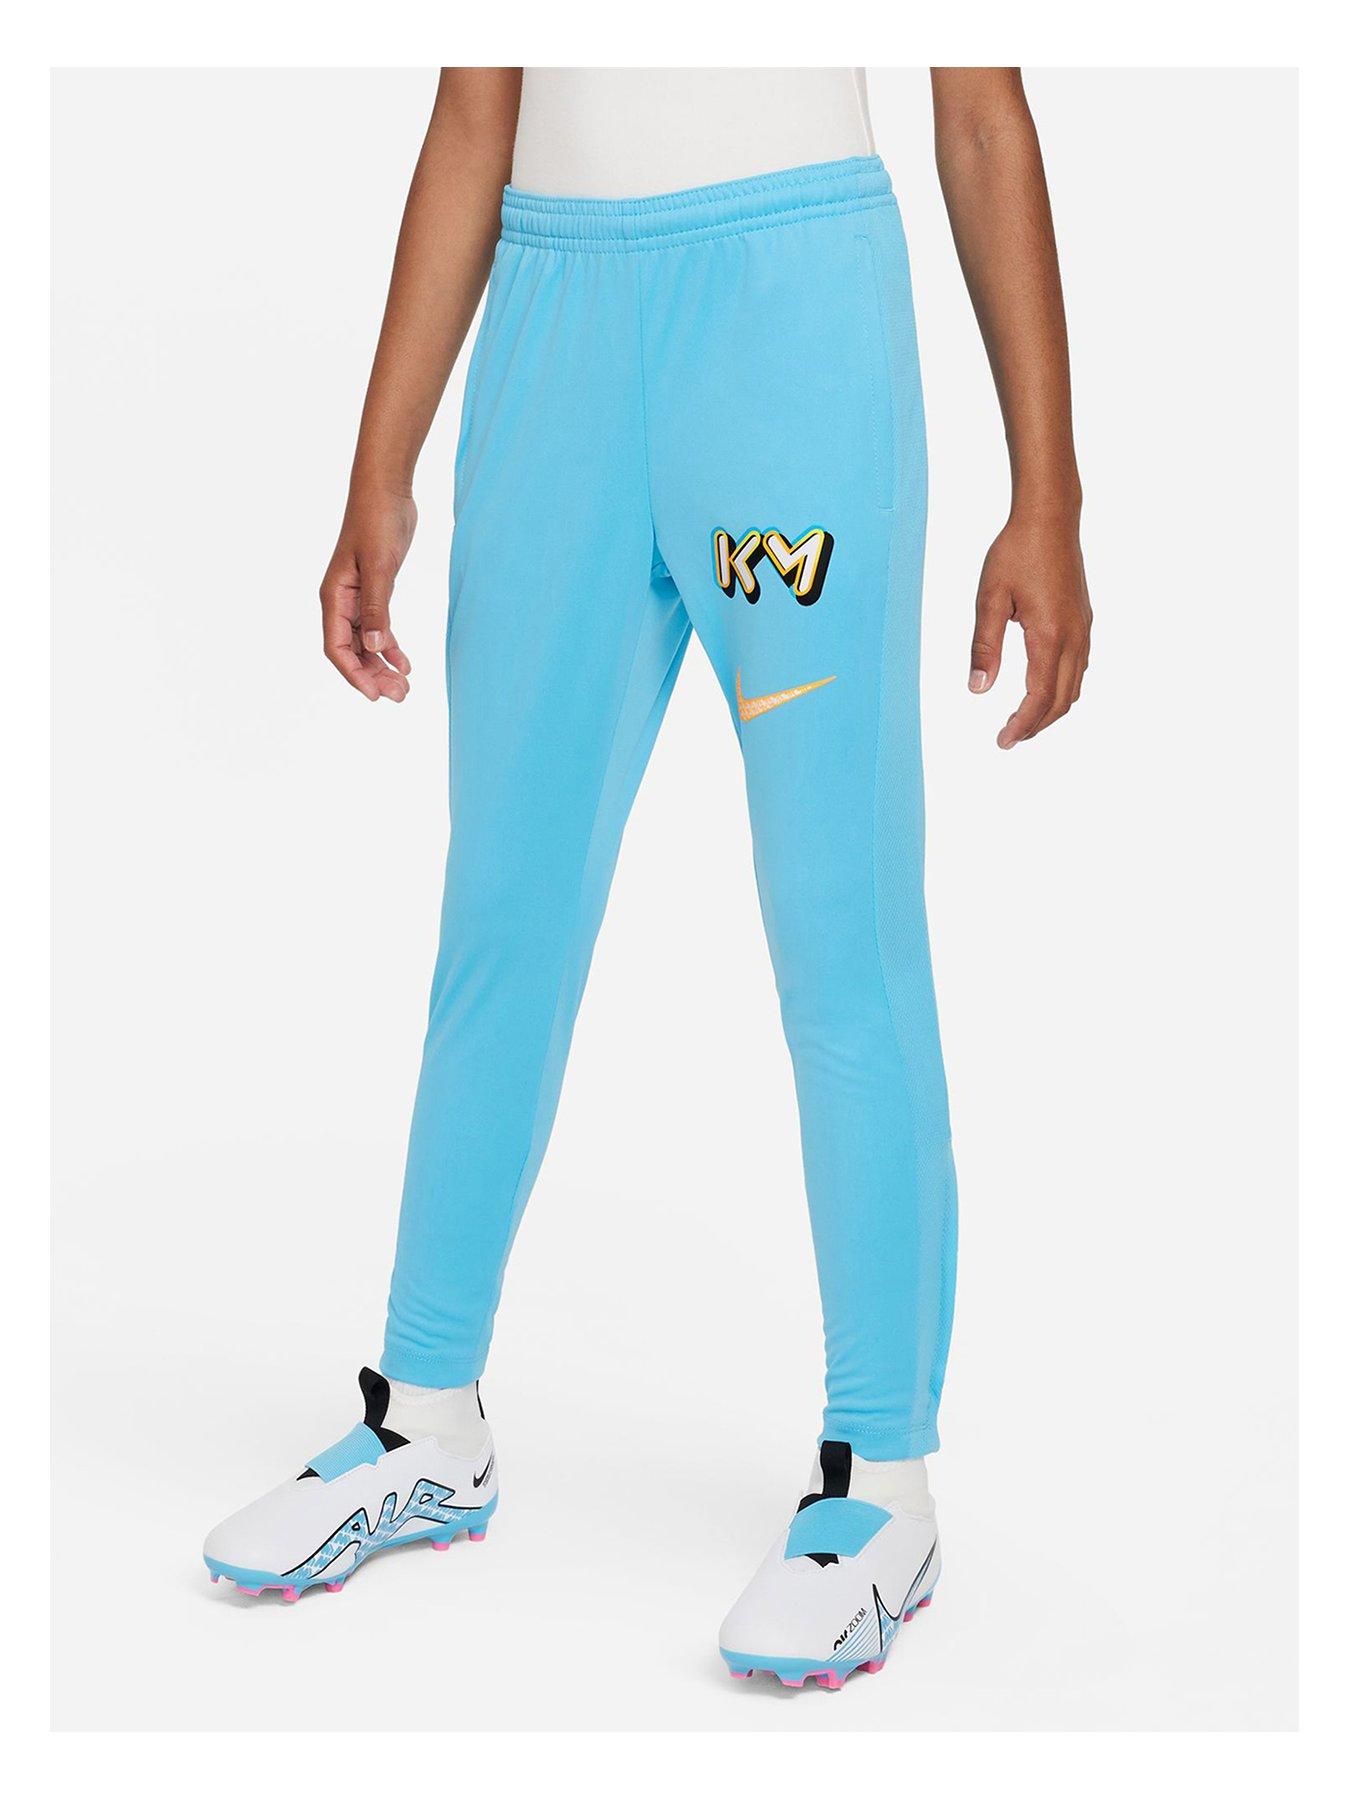 Buy Boys Youth Nike Air Jordan Therma Fit Track Pants (Large, Grey/Black)  at Amazon.in